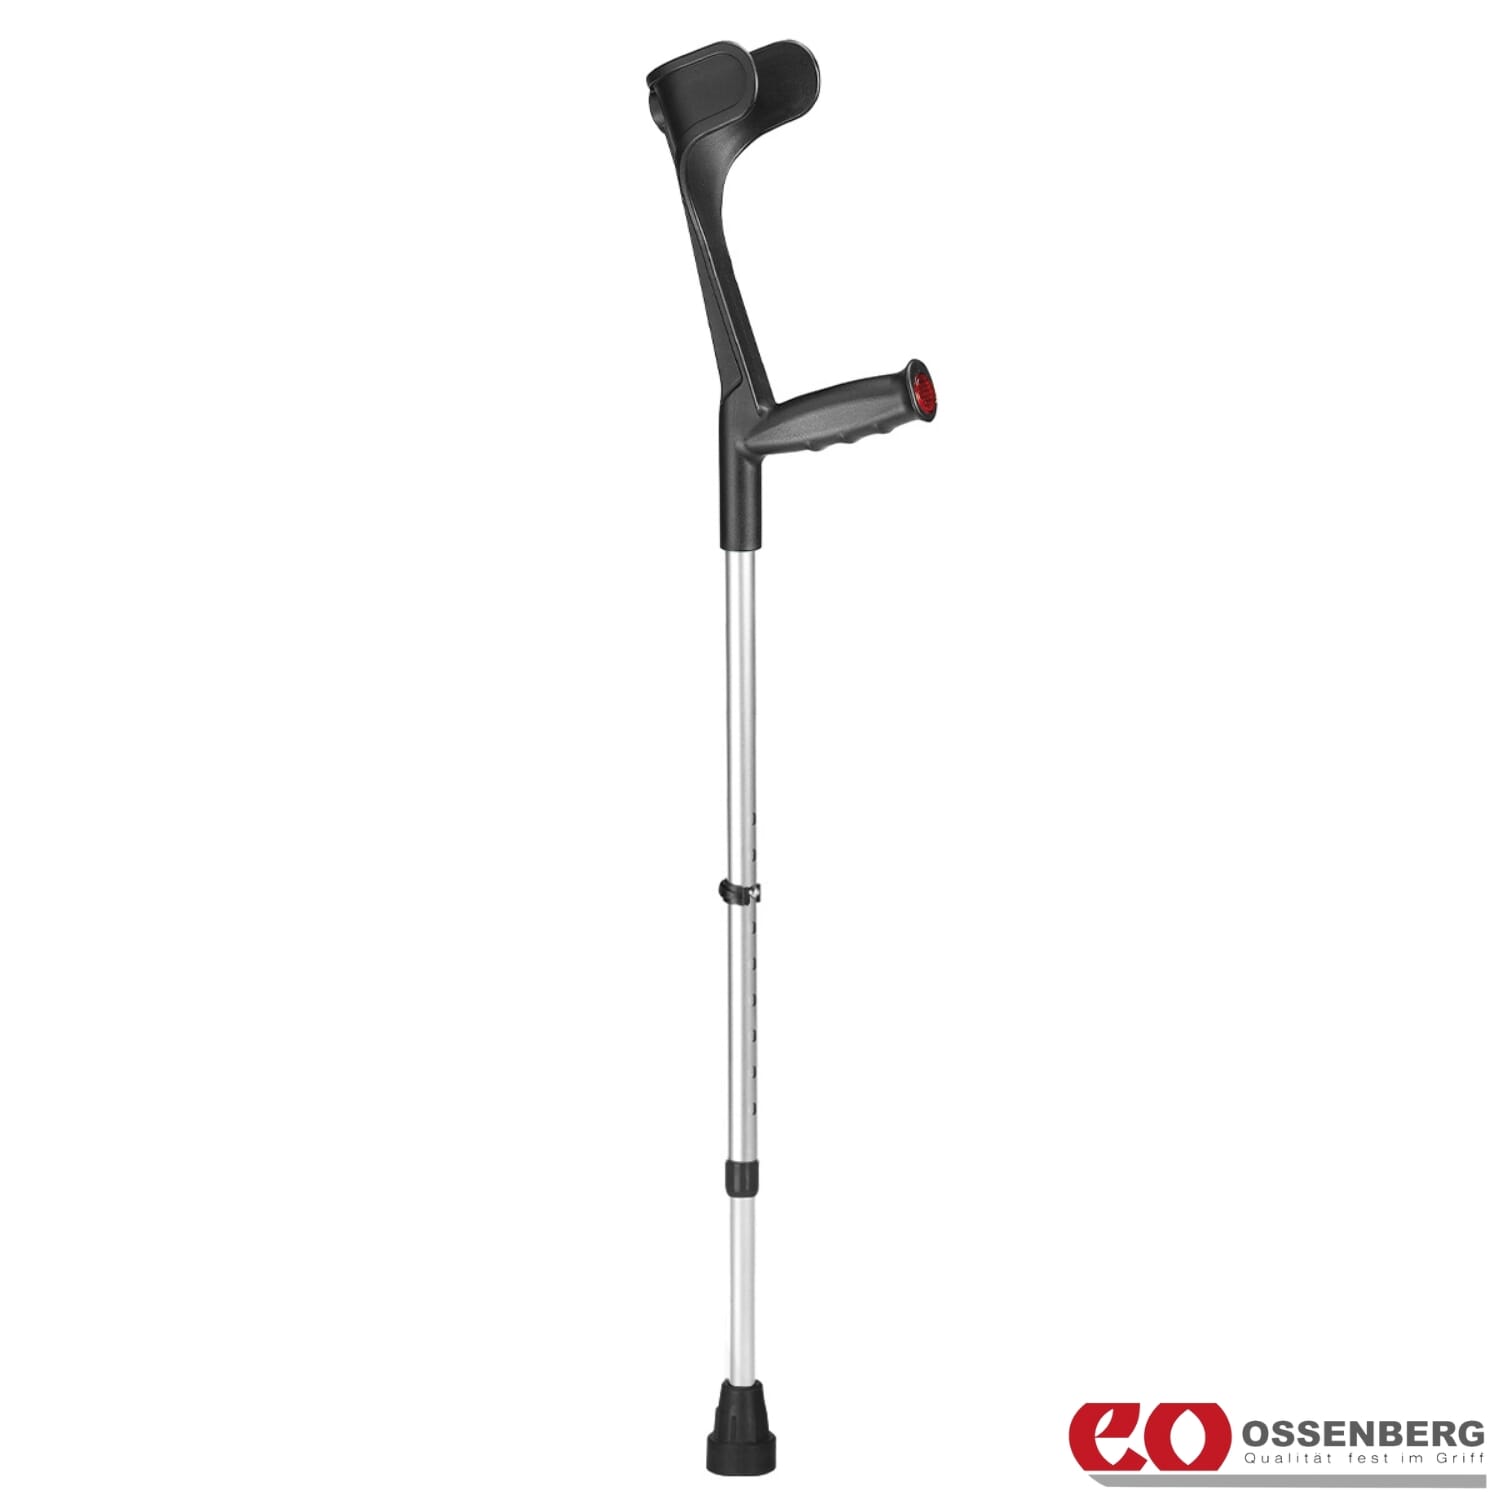 View Ossenberg Open Cuff Crutches Black Single information